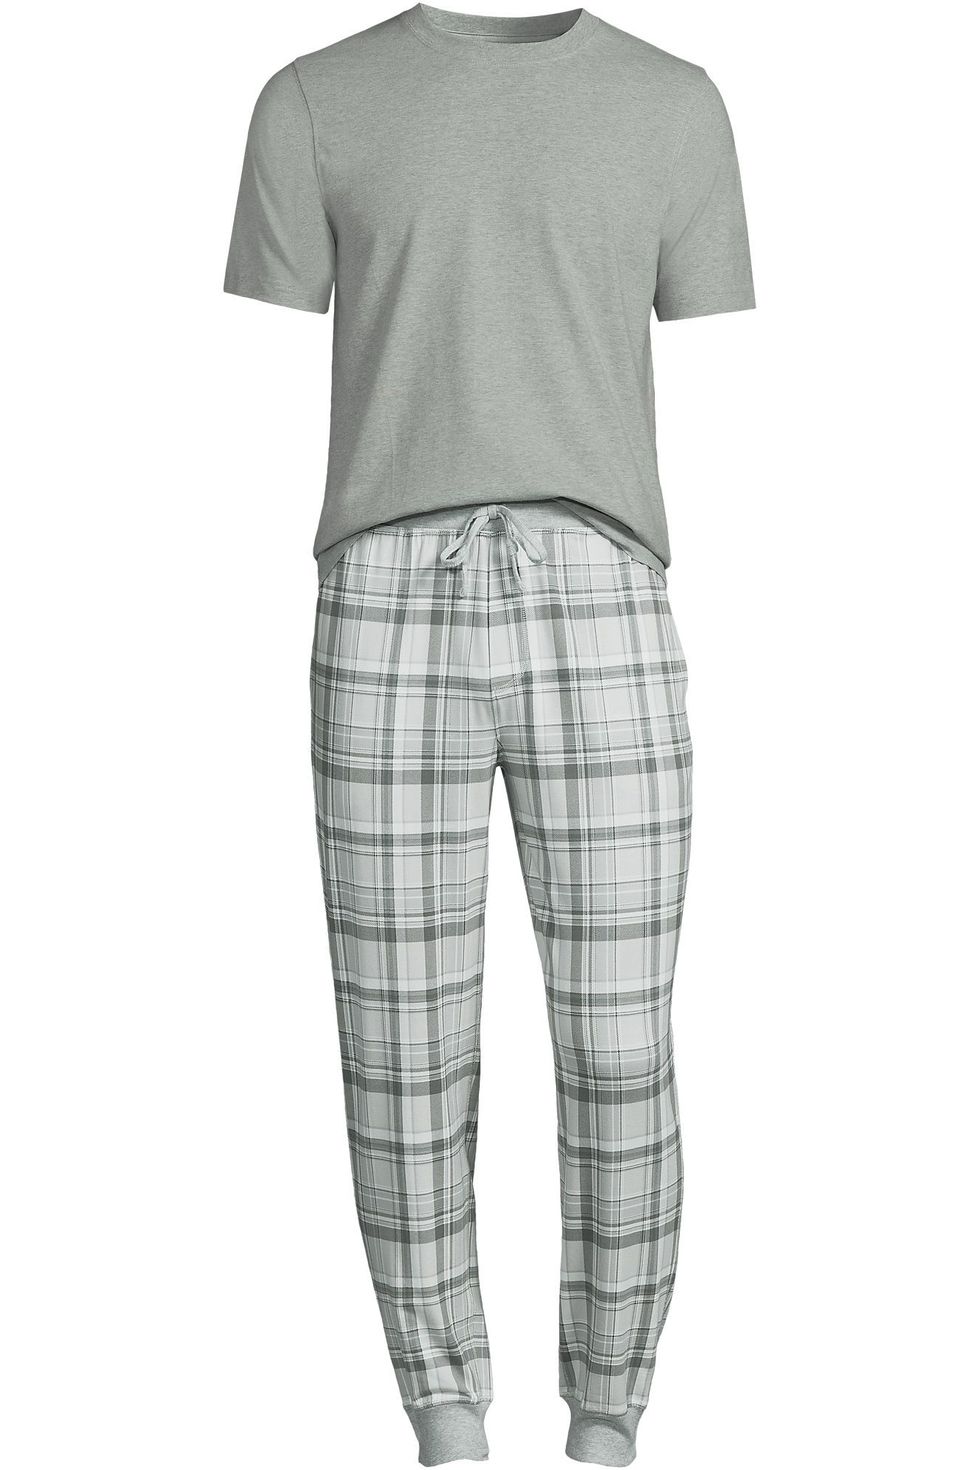 Most Comfortable Pajama Short Set, Editor Review